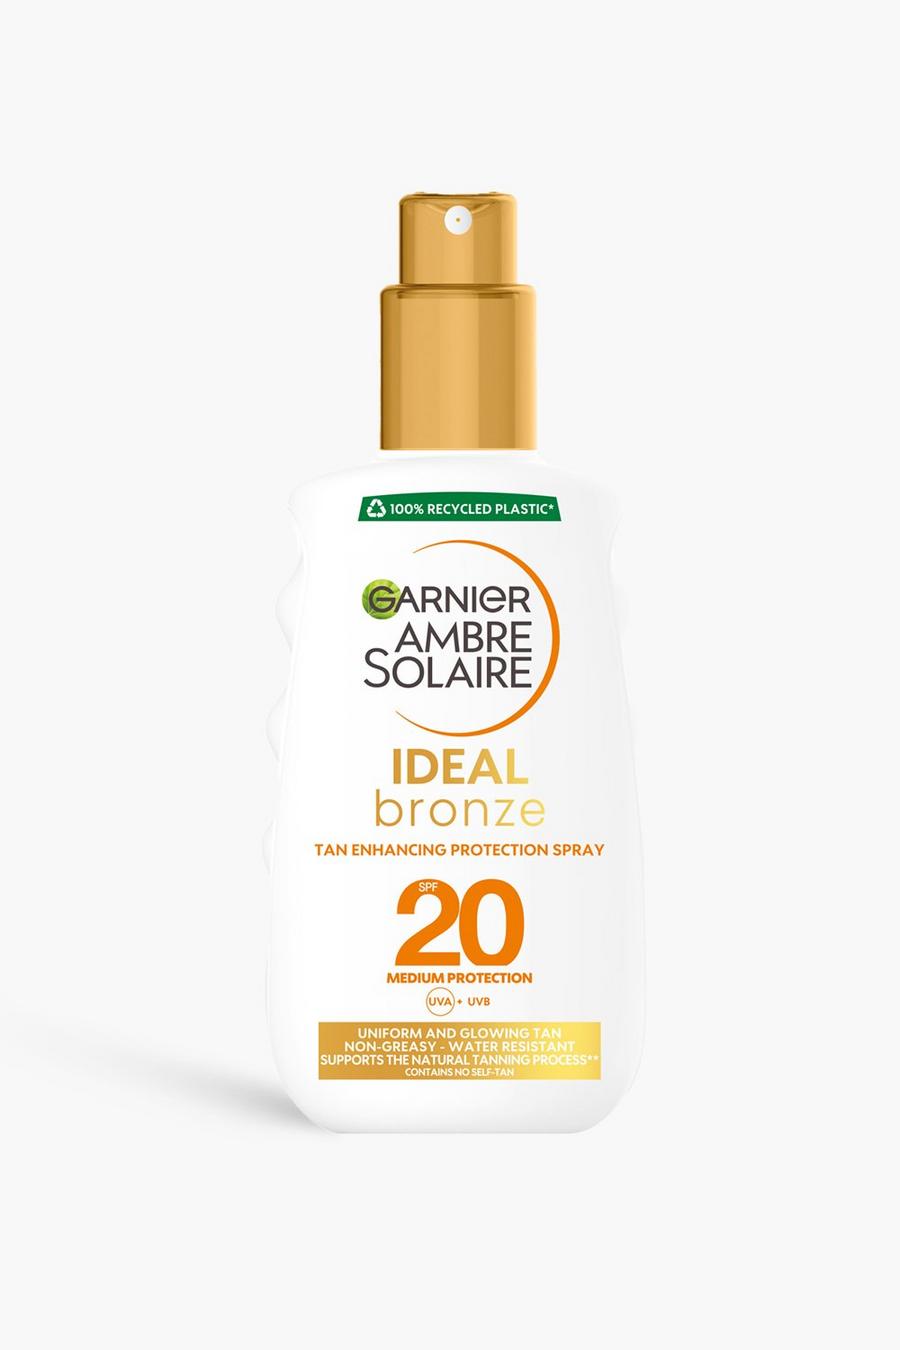 White vit Garnier Ambre Solaire Ideal Bronze Protective Sun Cream Spray SPF20, High Sun Protection Factor 20,  200ml (SAVE 32%)